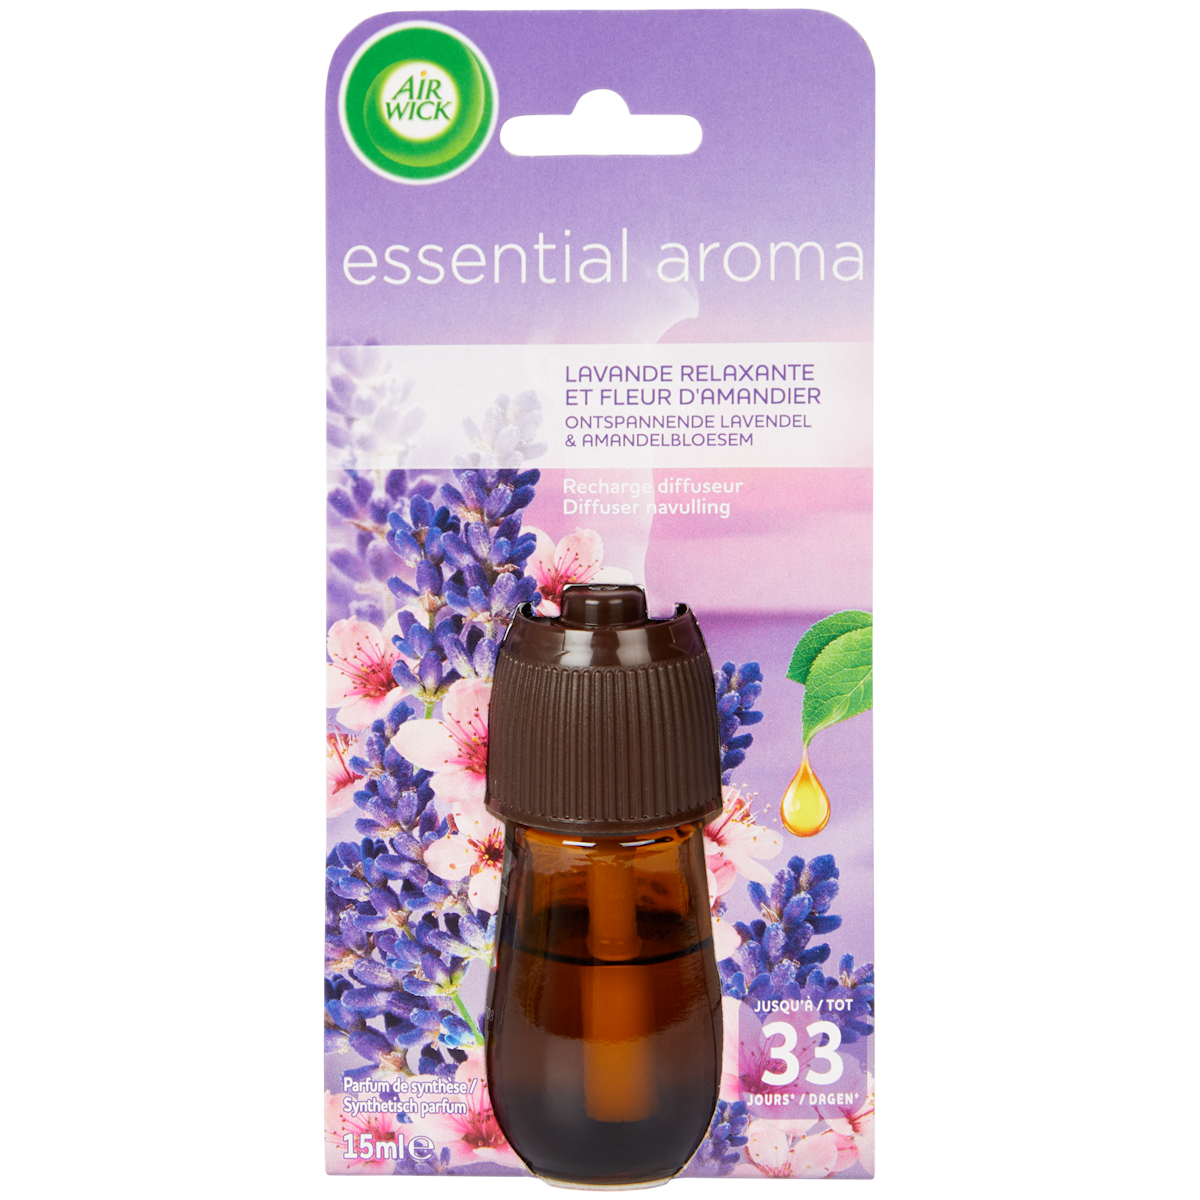 Air Wick Essential Aroma navulling Ontspannende Lavendel & Amandelbloesem